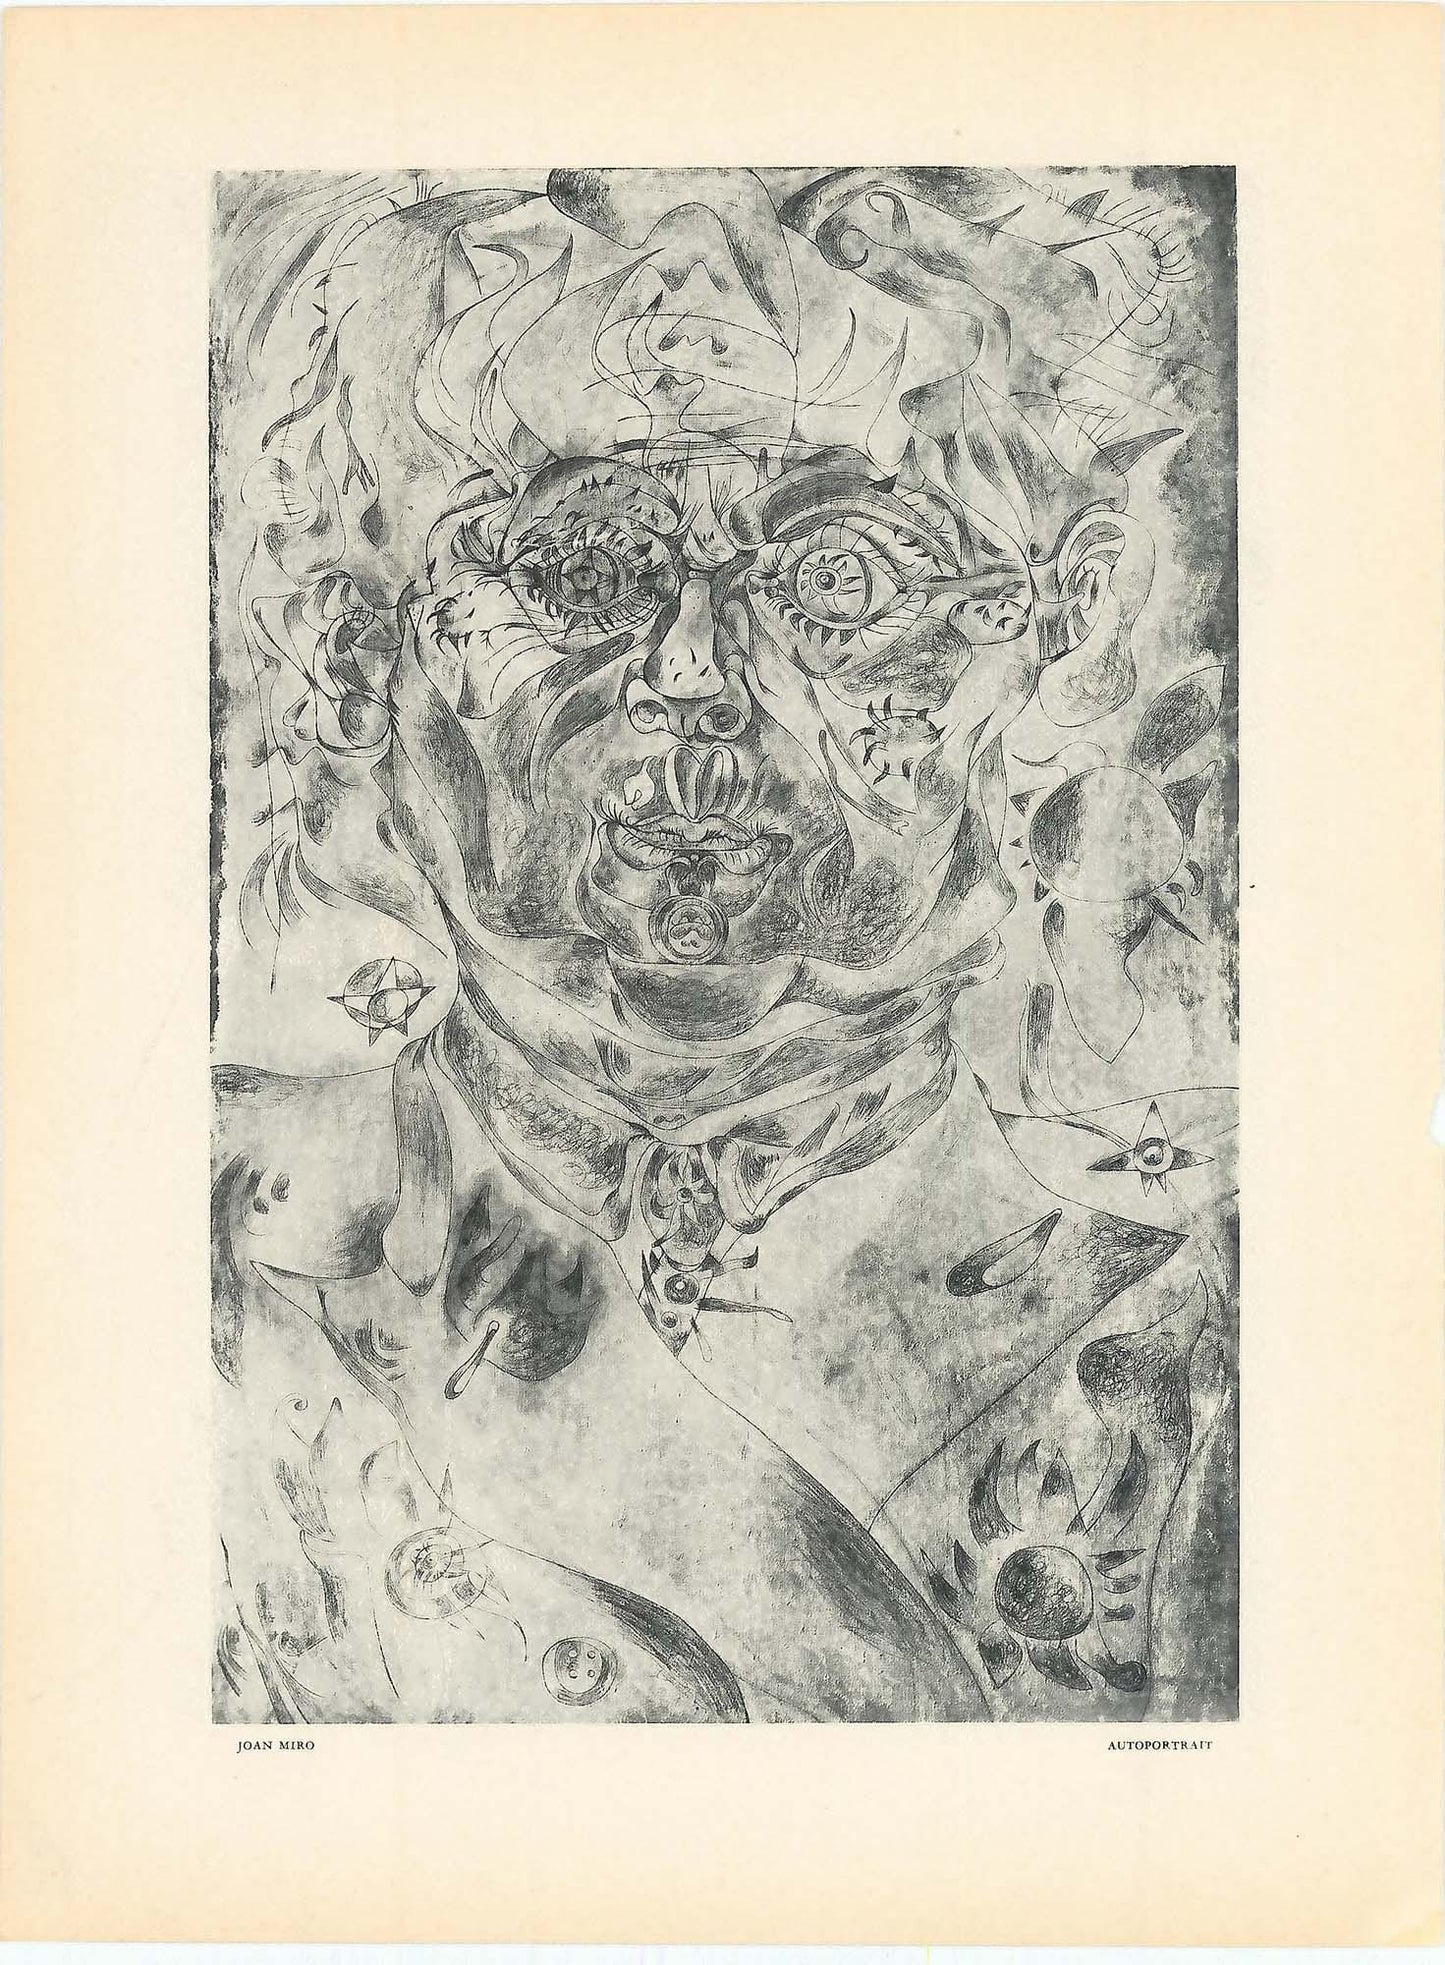 Joan Miro; Autoportrait Verve Edition: Vol. 2 No 5-6